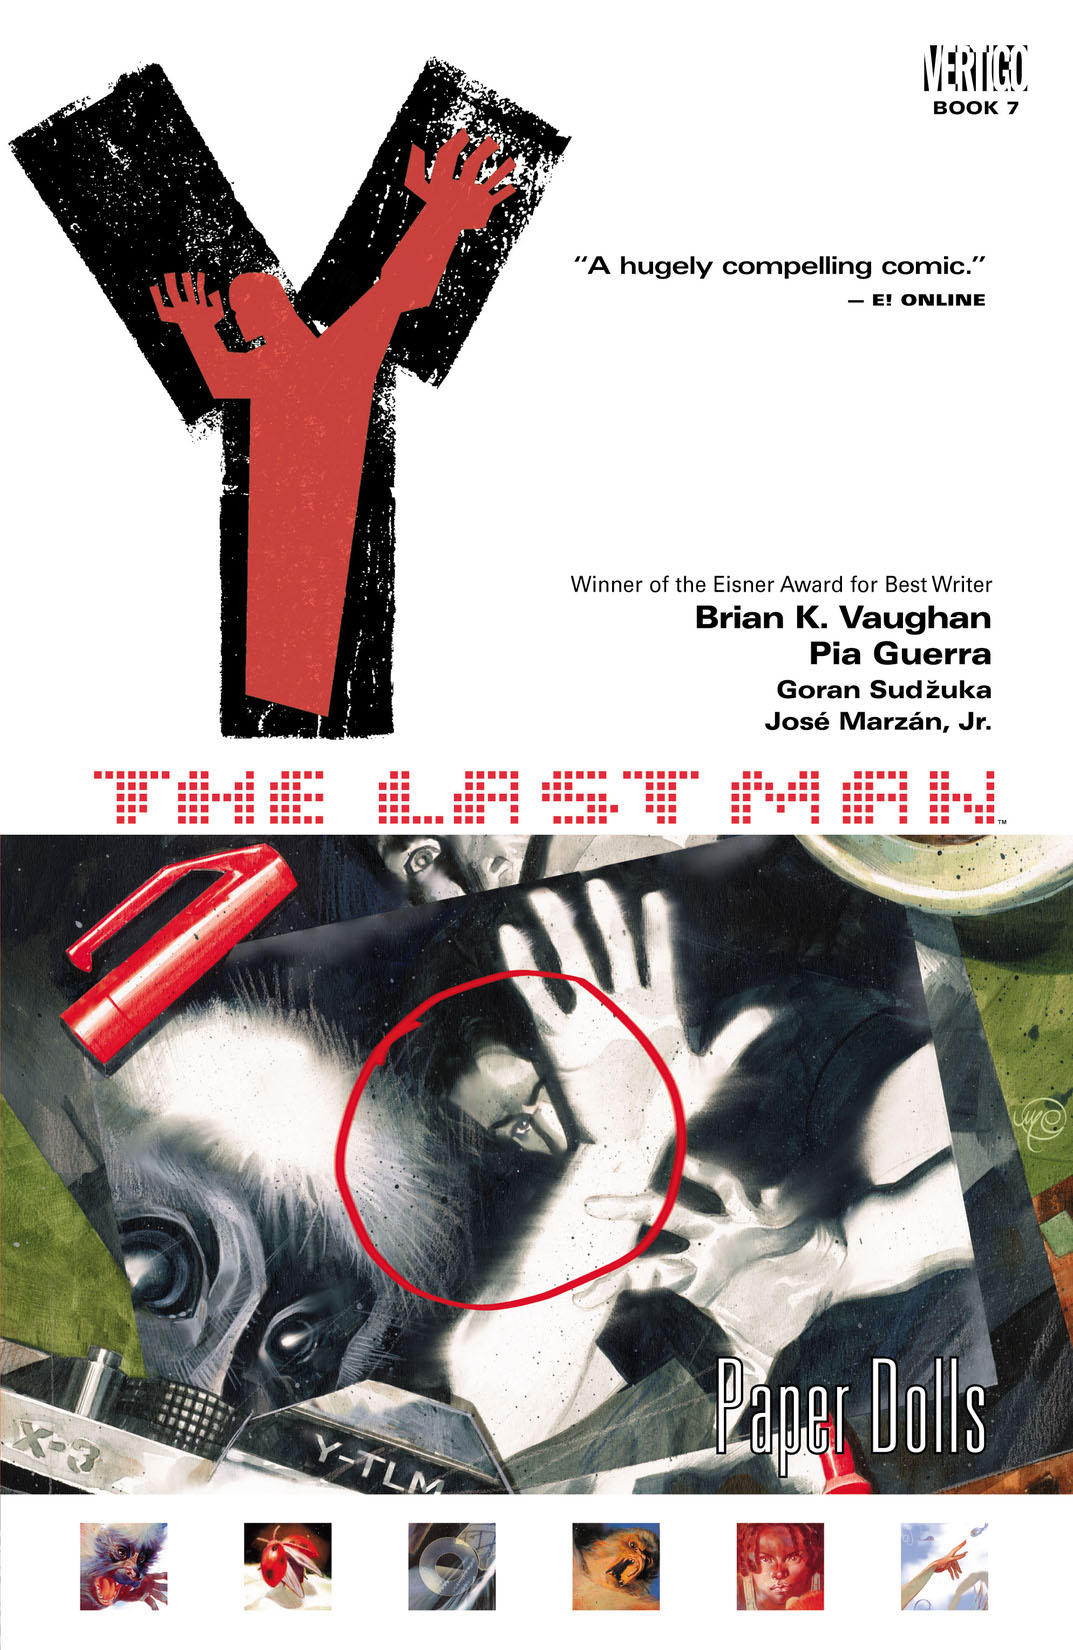 Y: The Last Man Vol. 7: Paper Dolls preview images